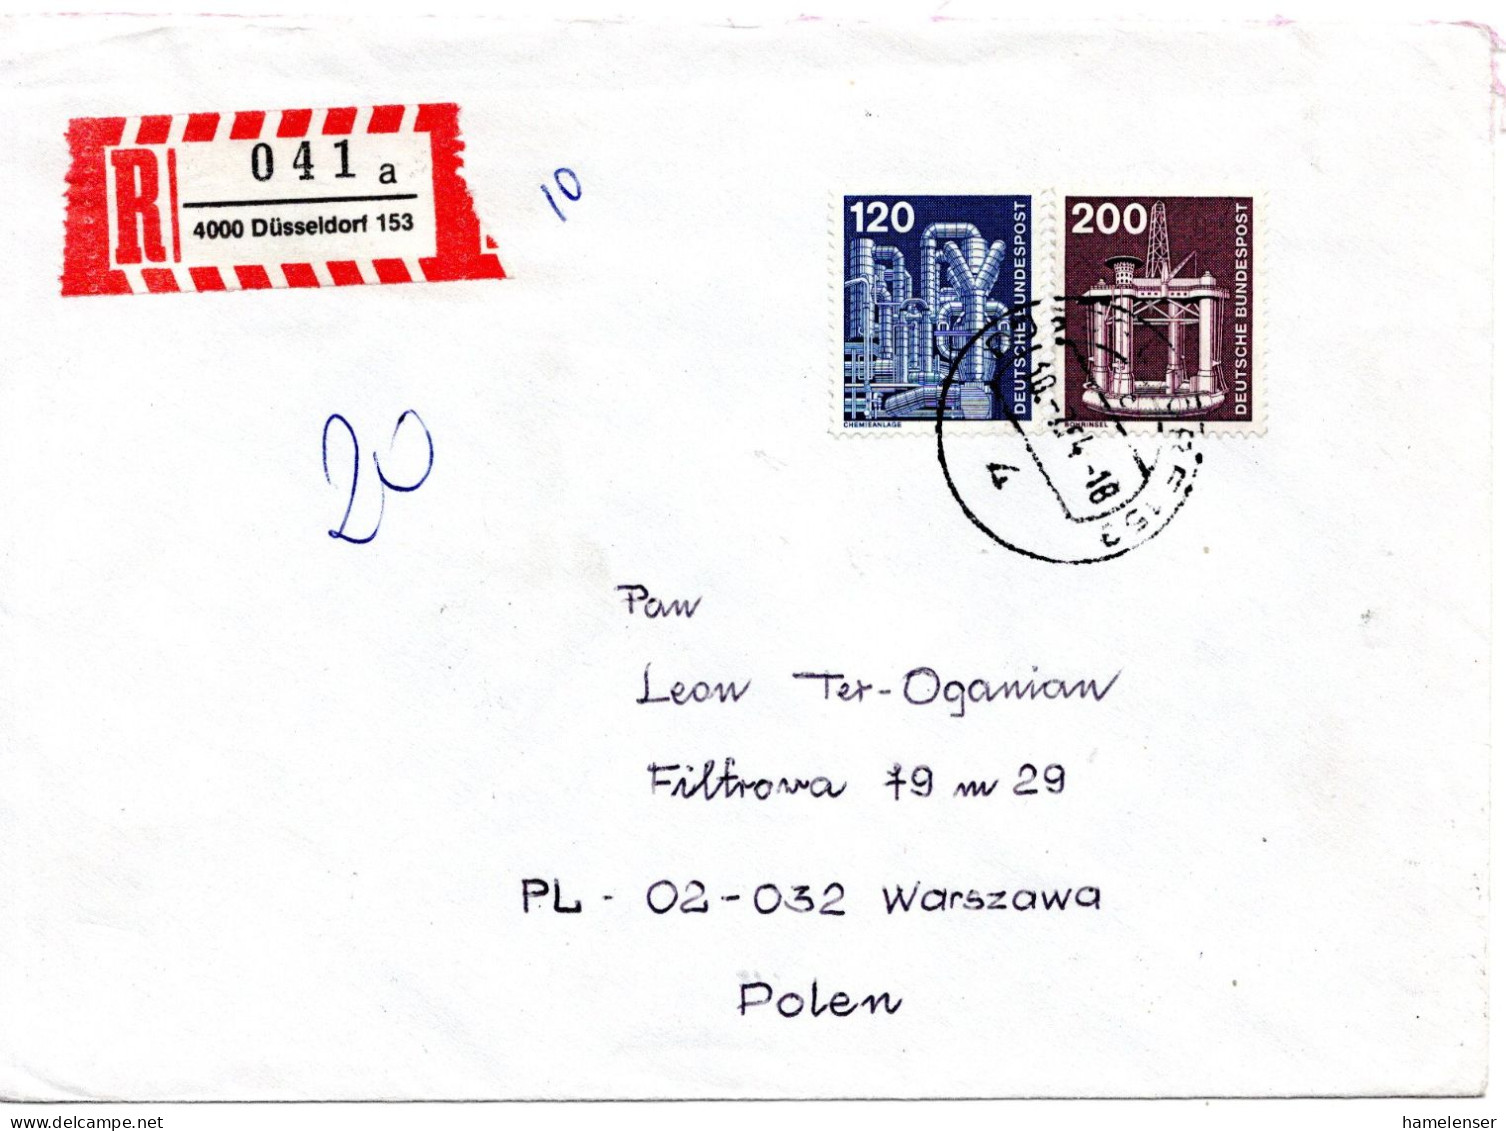 78270 - Bund - 1984 - 200Pfg I&T MiF A R-Bf DUESSELDORF -> WARSZAWA (Polen) - Storia Postale